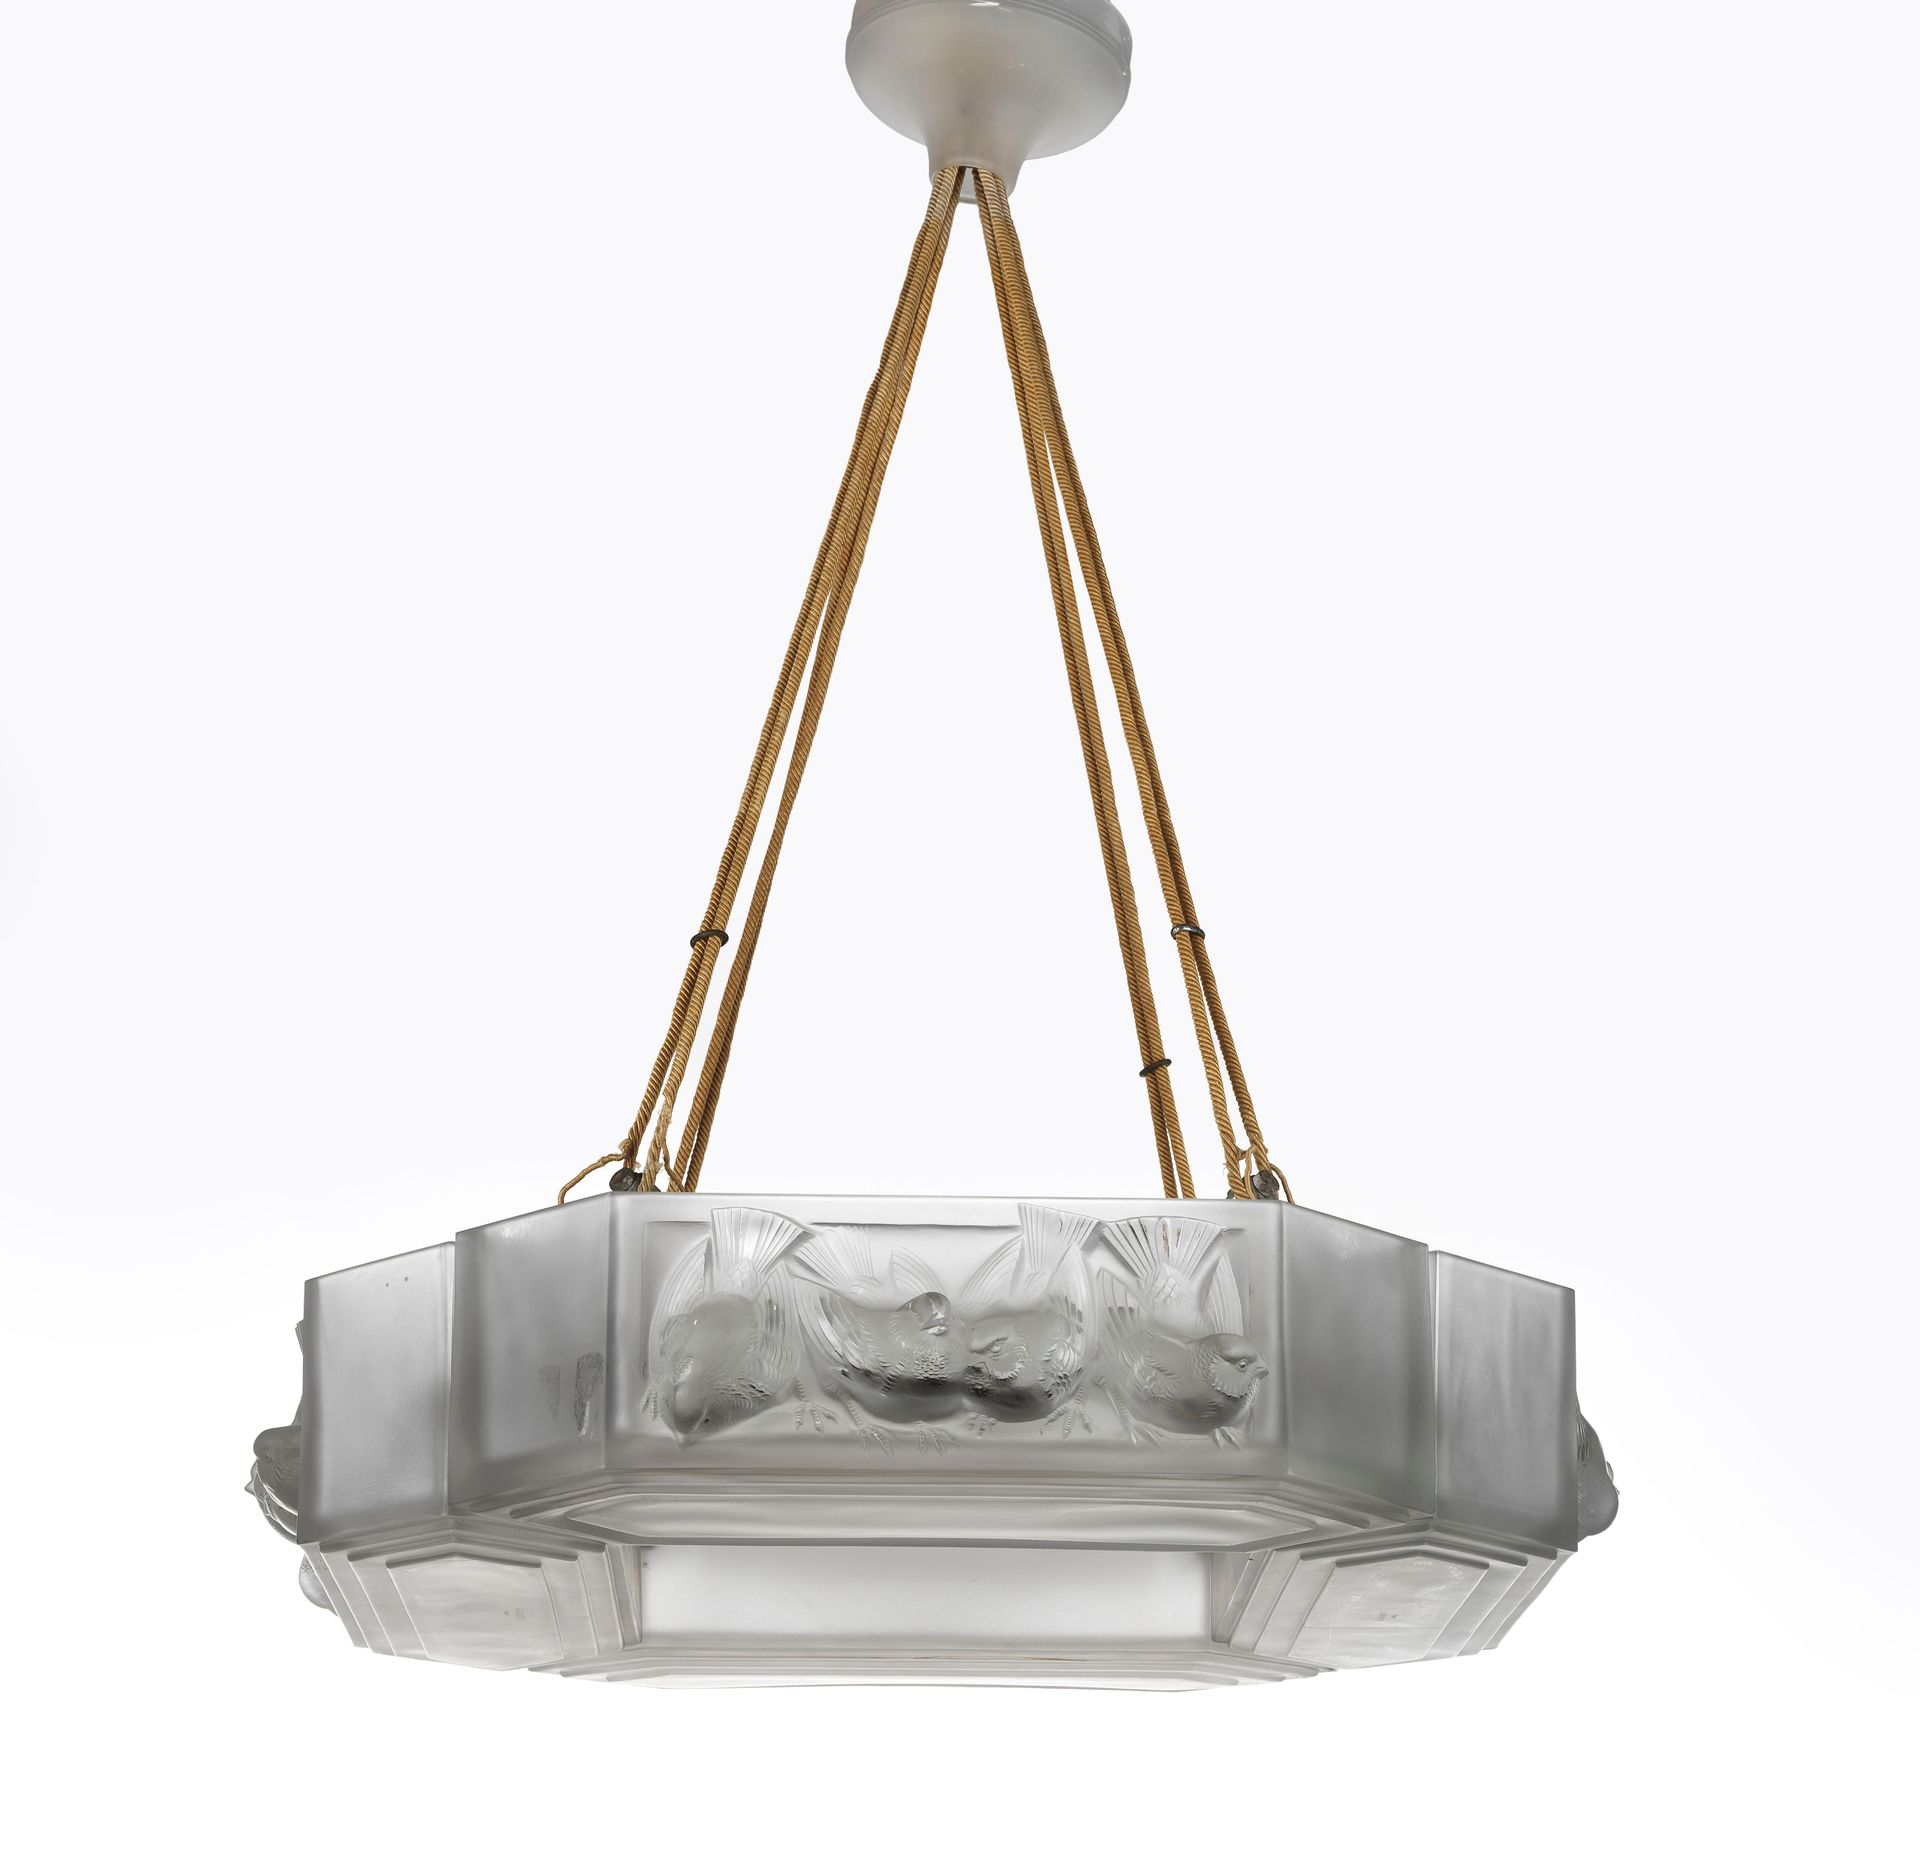 Null Lustro modello Bruxelles firmato R. Lalique
Verre blanc moulé-pressé satiné&hellip;